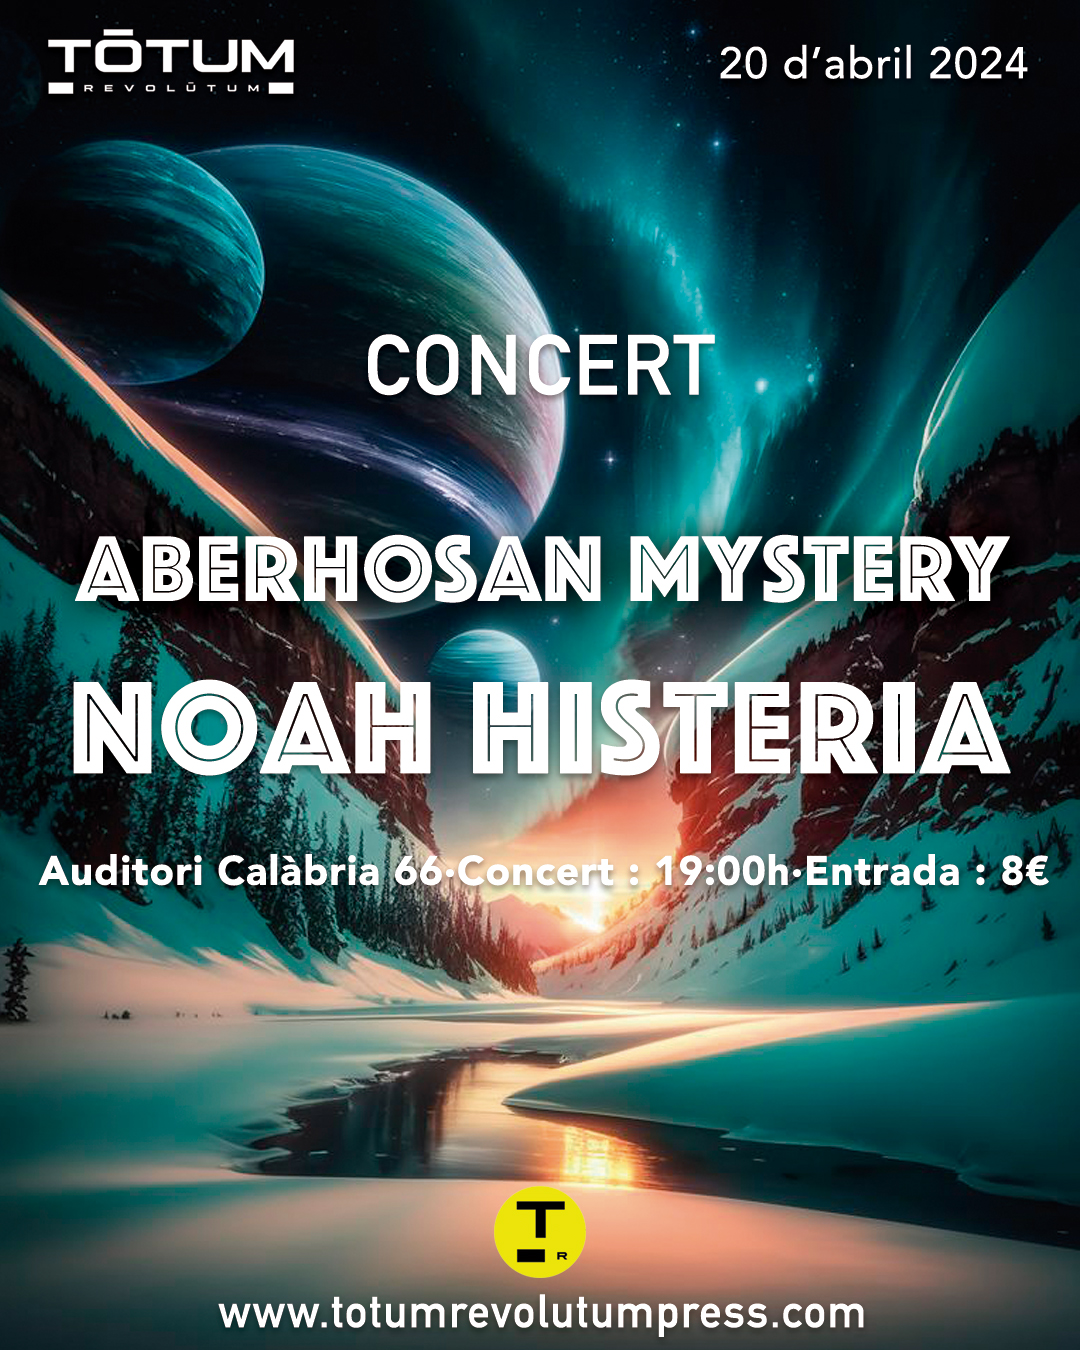 ABERHOSAN MYSTERY + NOAH HISTERIA - TÓTUM REVOLÚTUM en Barcelona - Mutick